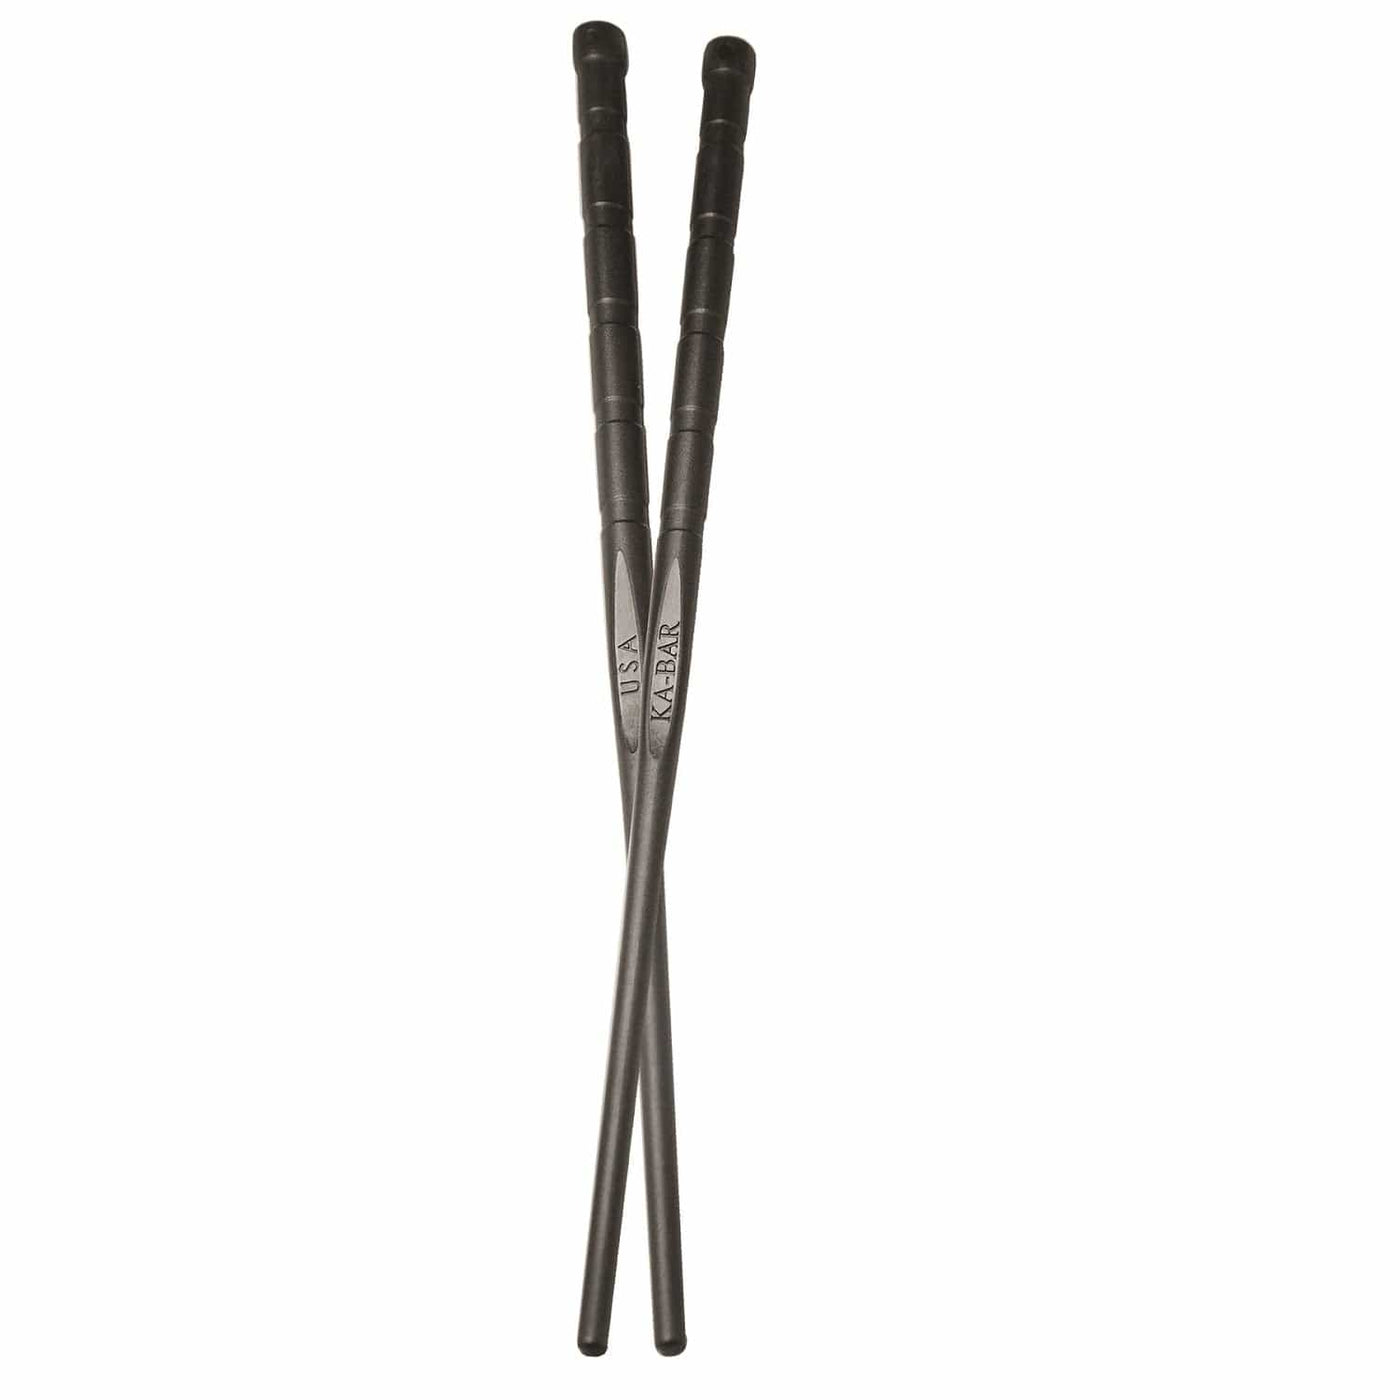 Ka-Bar Knives KA-BAR Chopsticks 9.25 in Overall Length Set of 2 Sets Gifts And Novelty